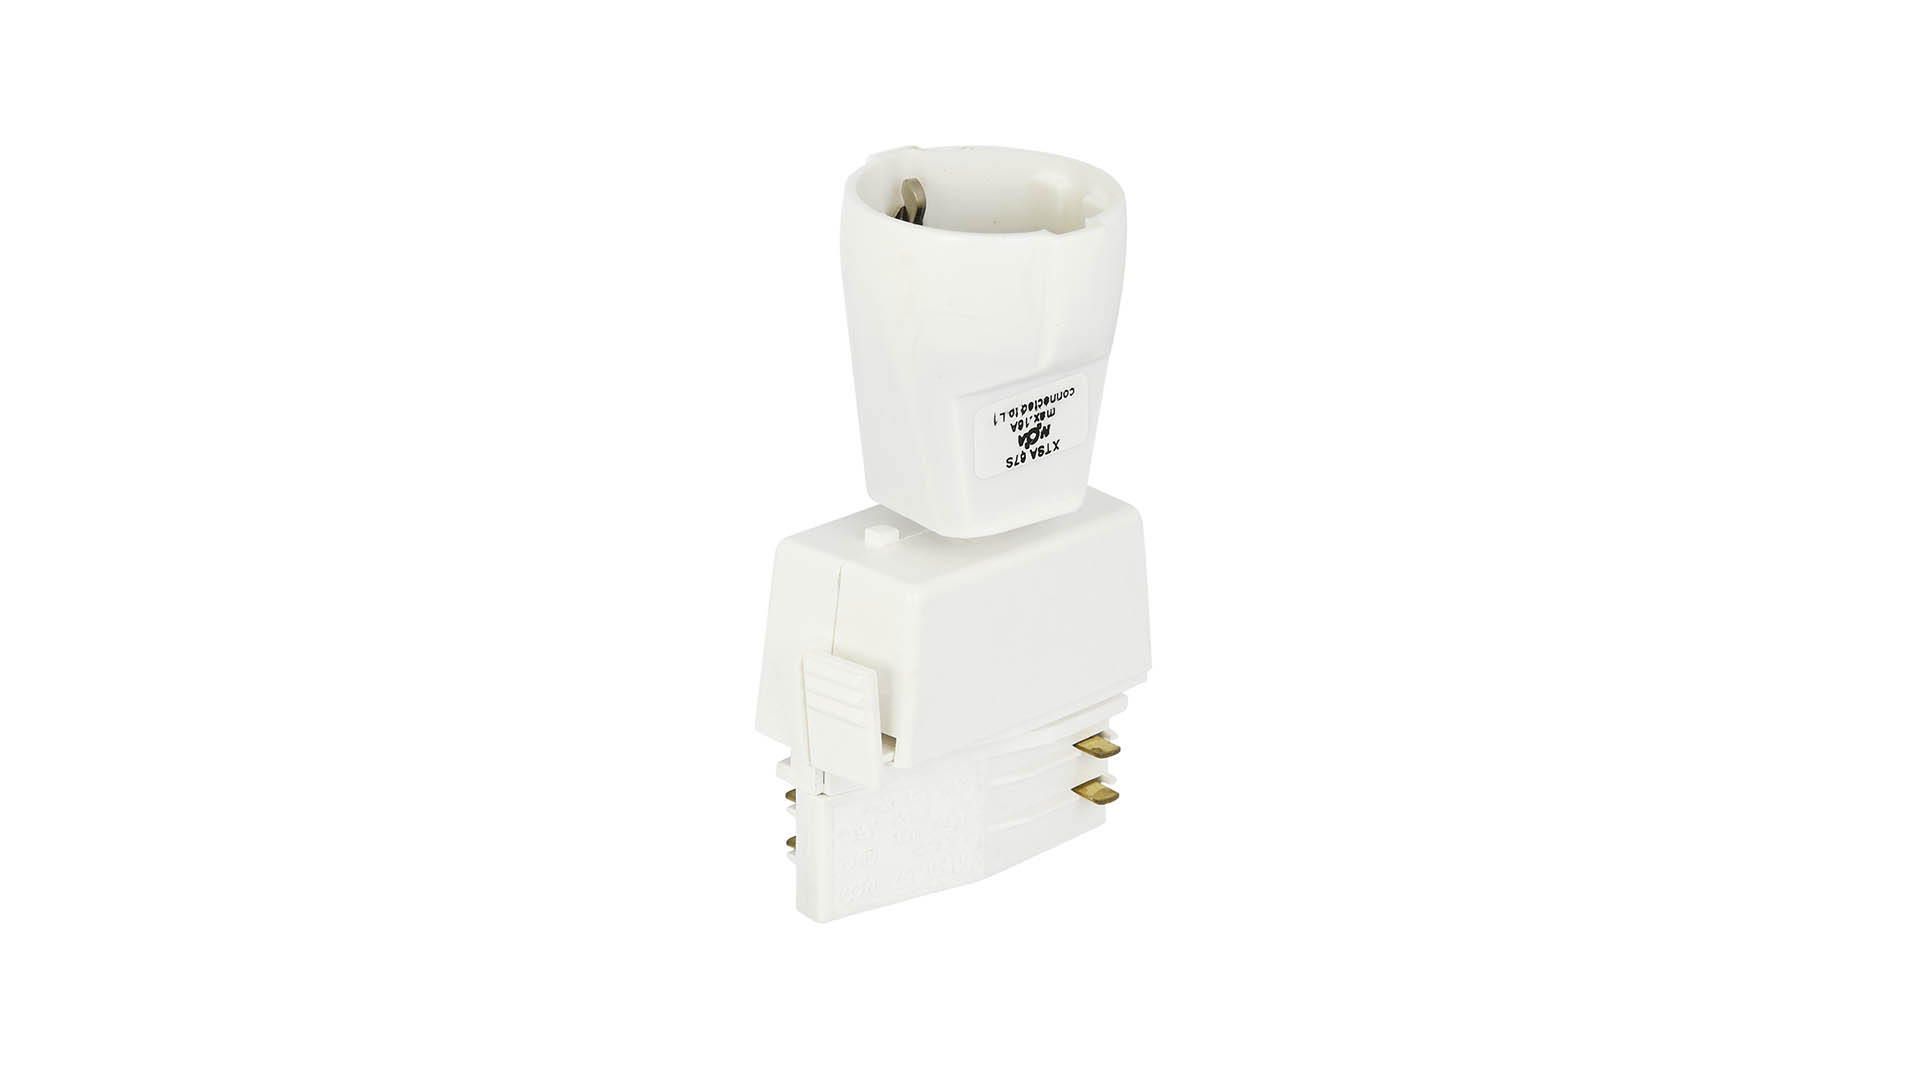 Schuko socket for Pro 16A, 250V 100 N, White